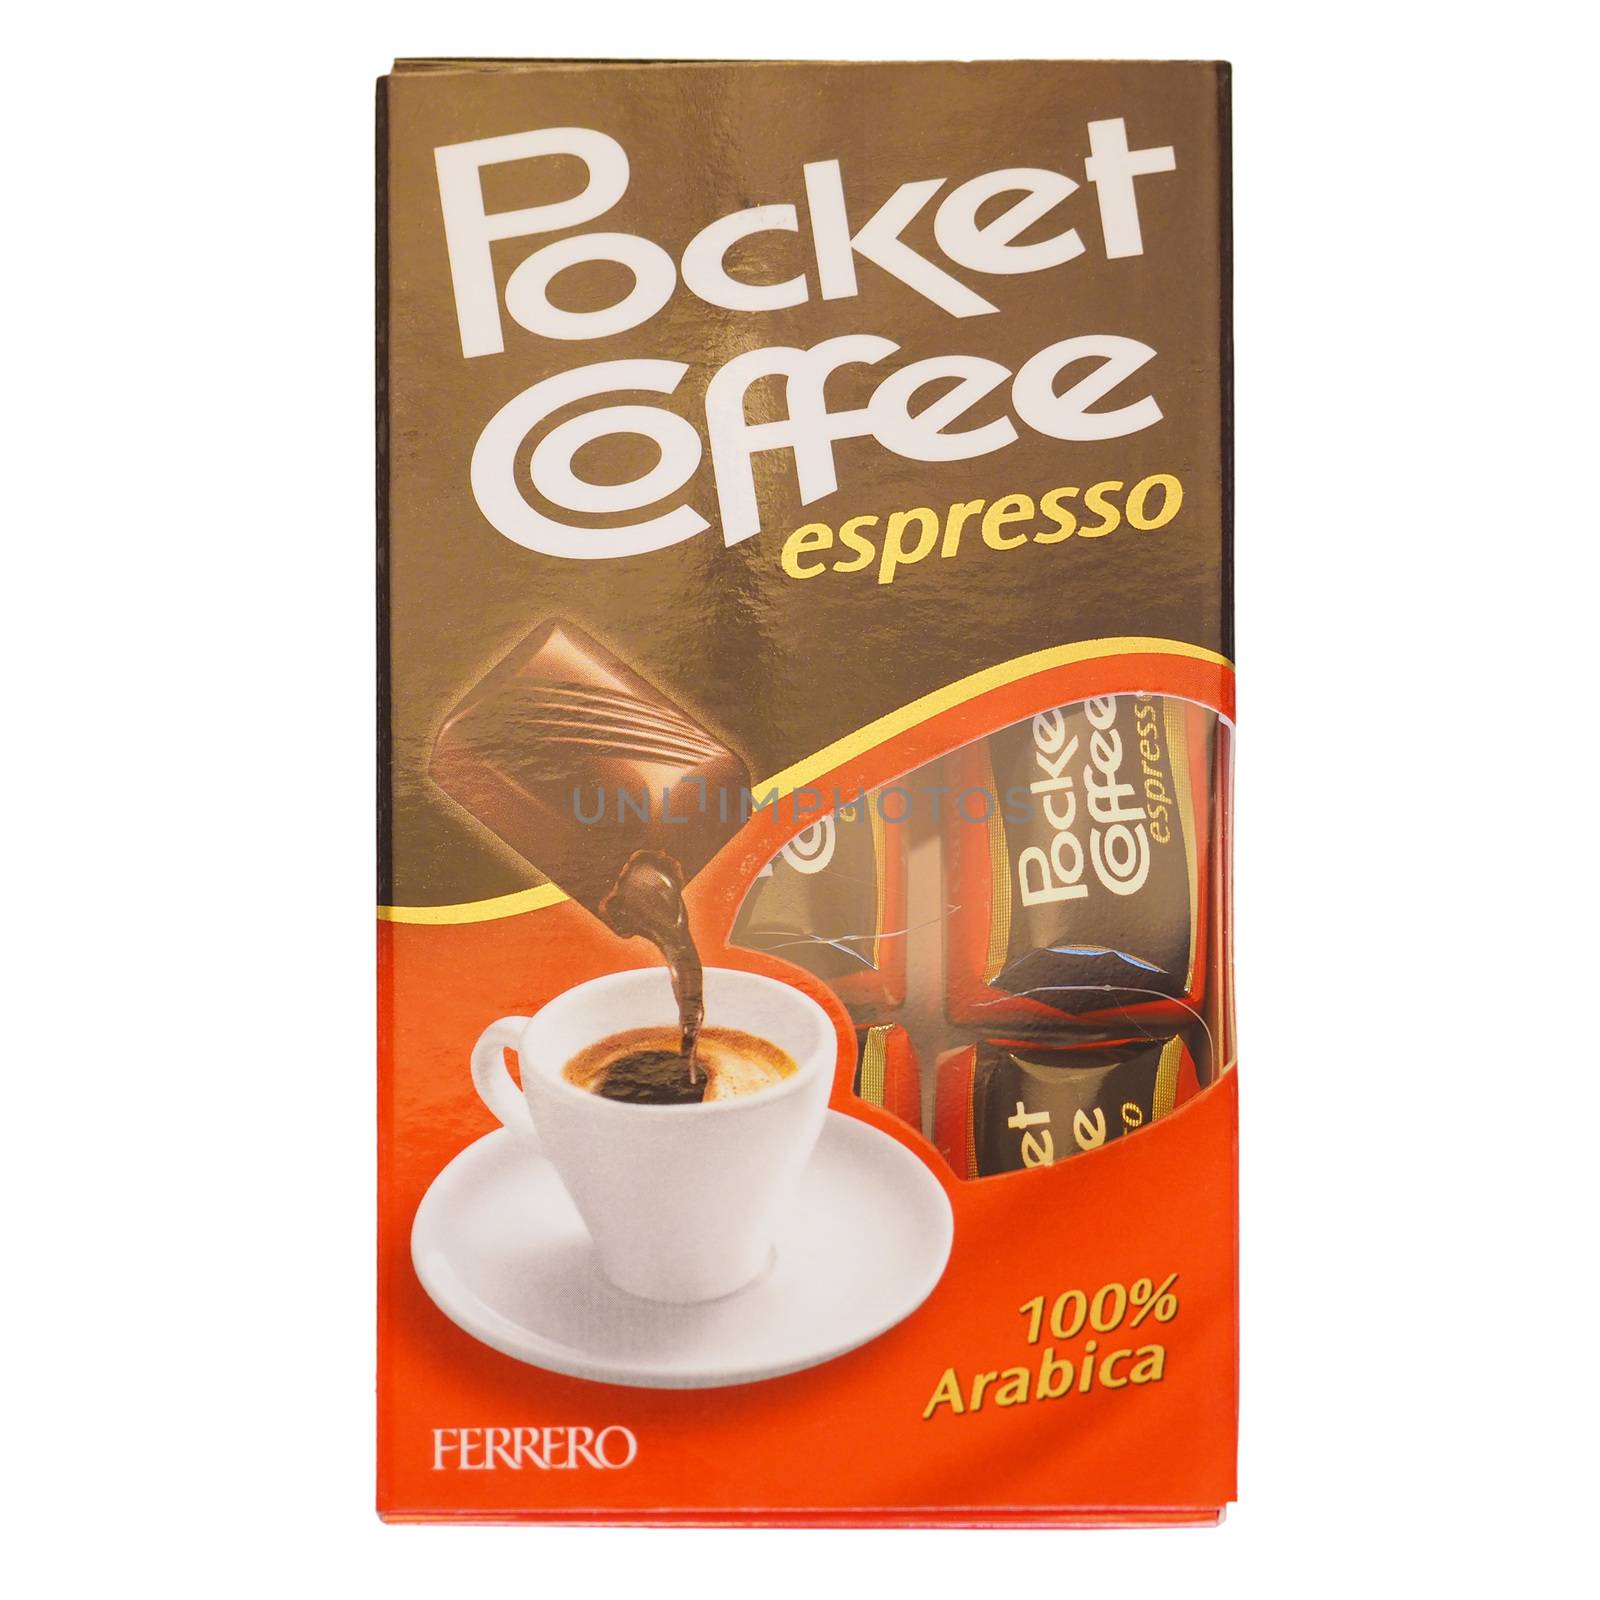 Pocket Coffee by claudiodivizia